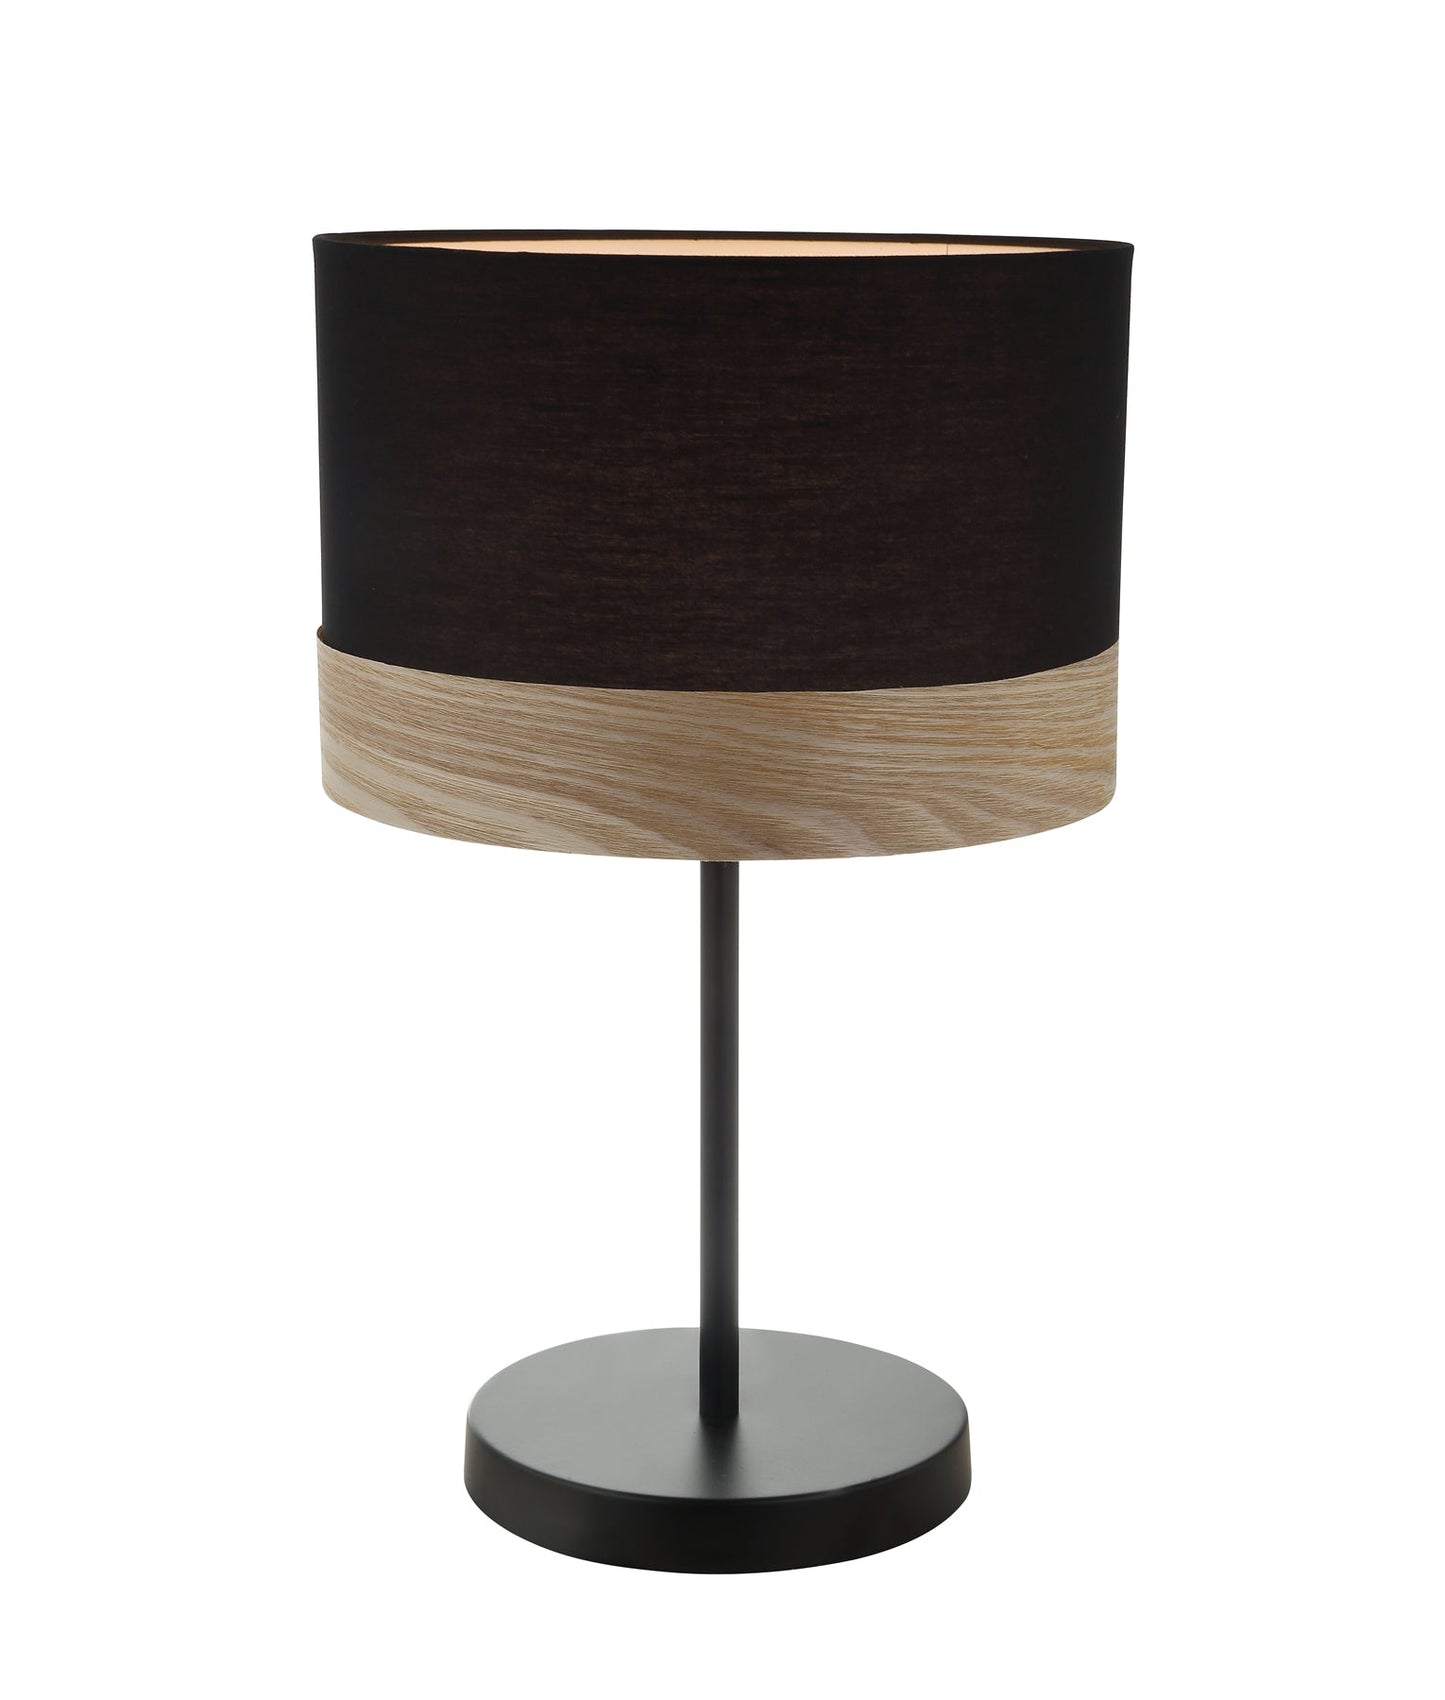 TAMBURA: Scandinavian Medium Round Shape Table Lamps